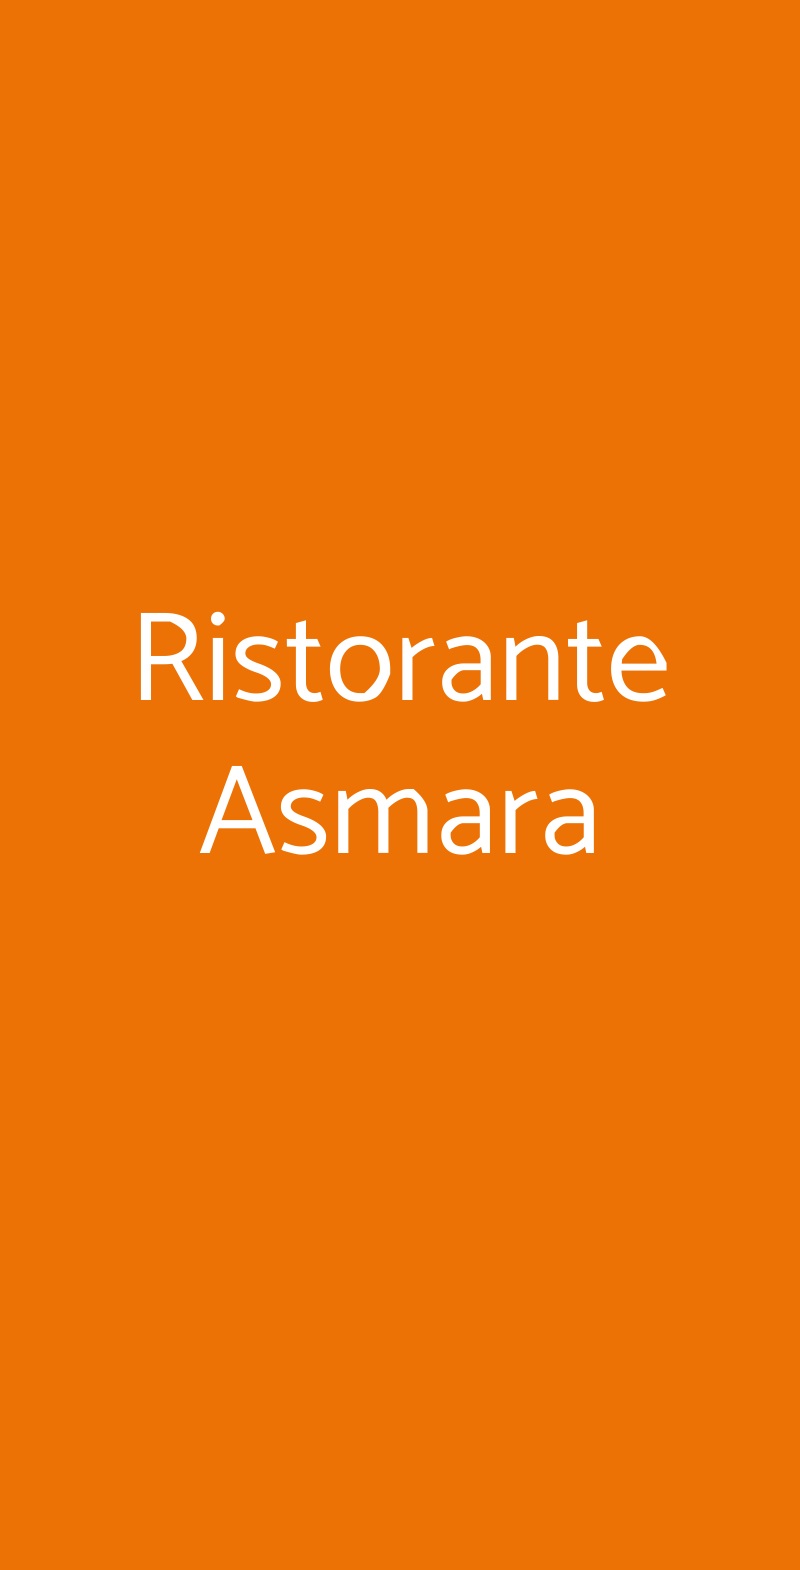 Ristorante Asmara Milano menù 1 pagina